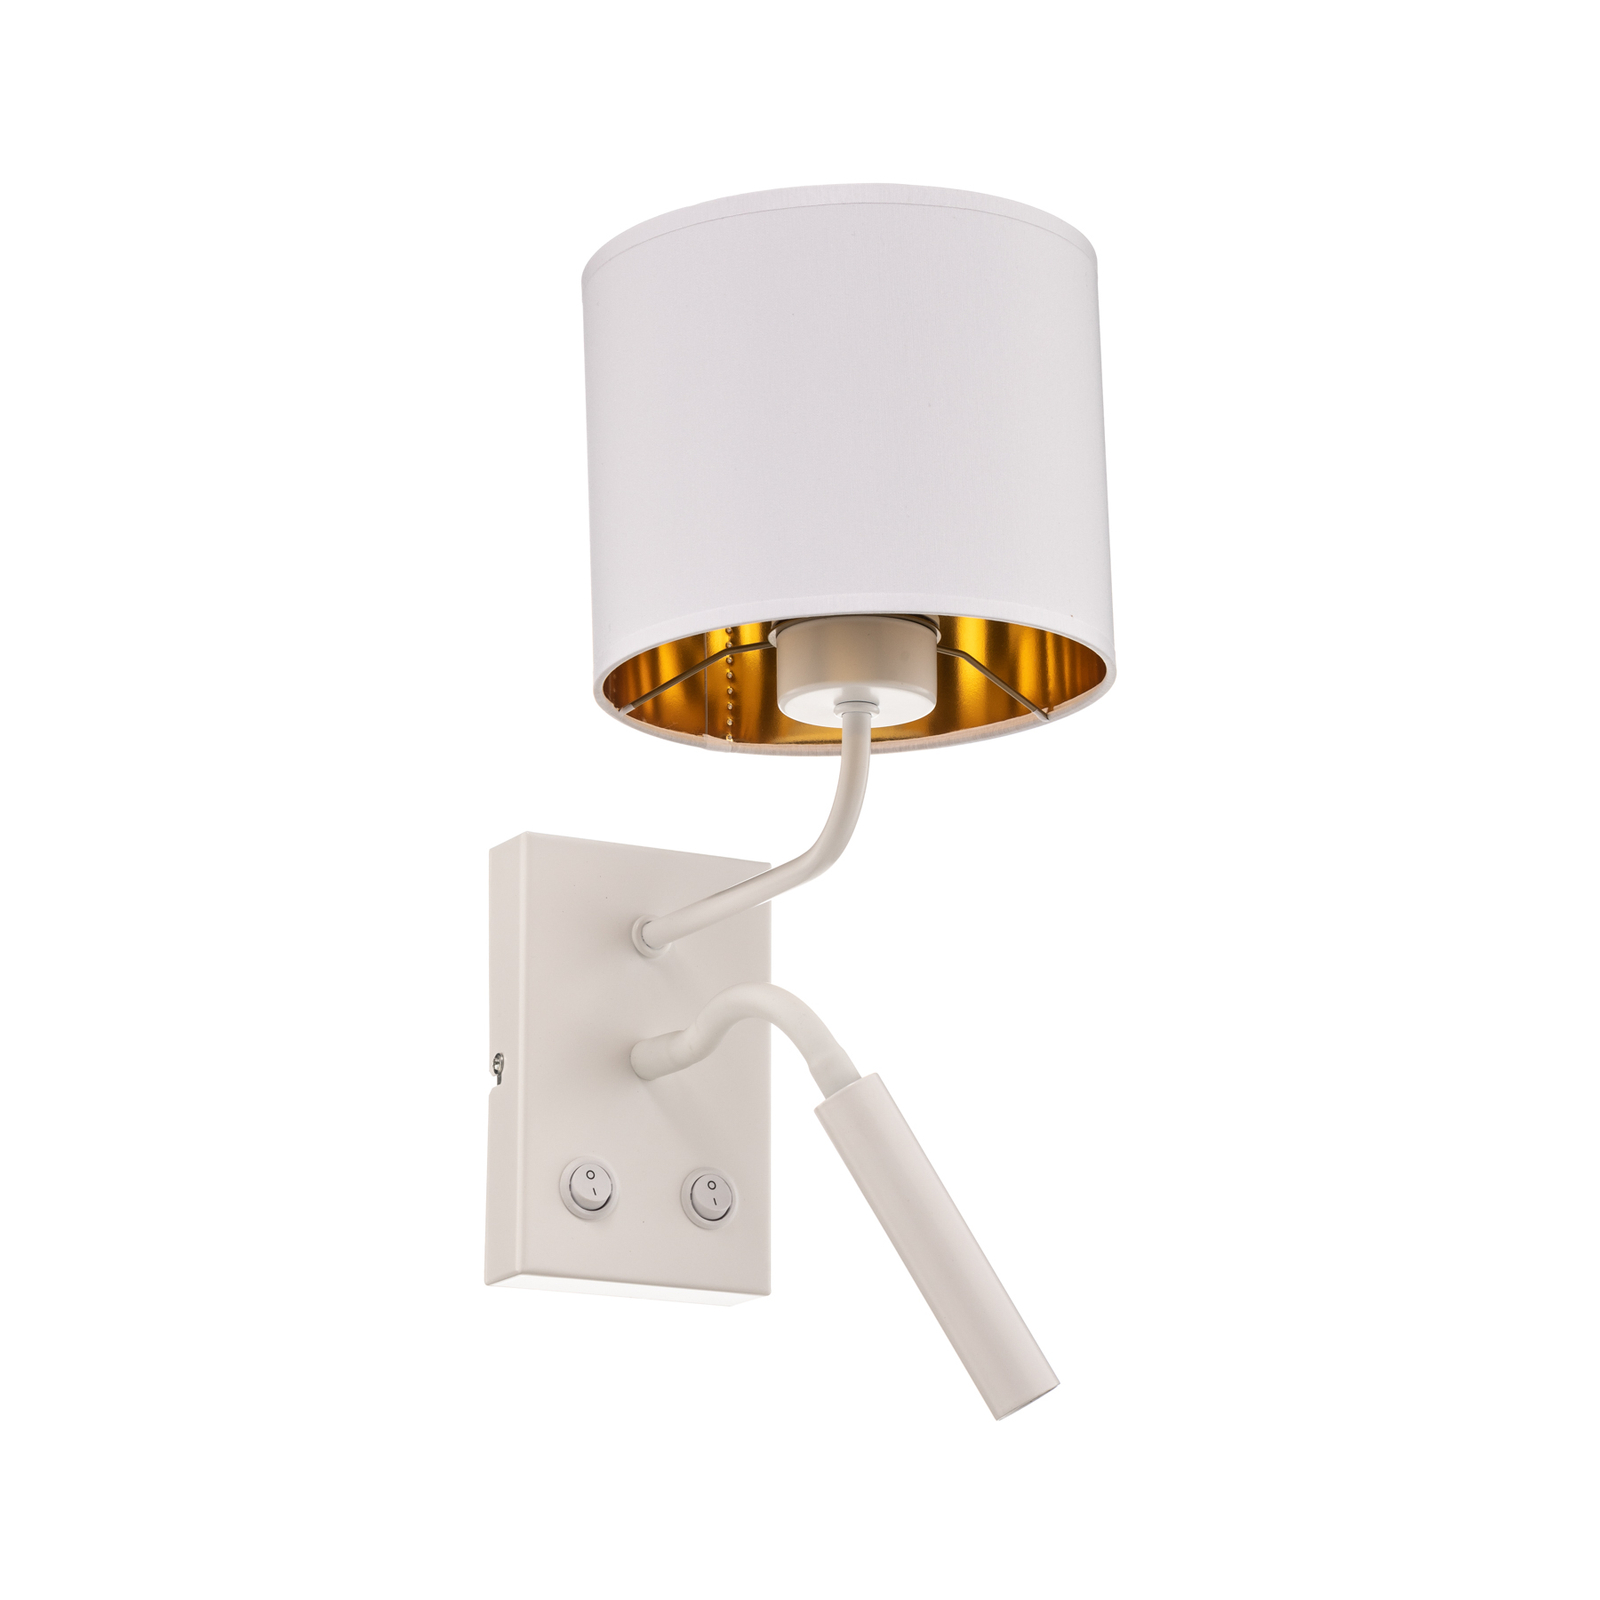 Wandlamp Soho, cilindervormig, leeslampje wit/goud